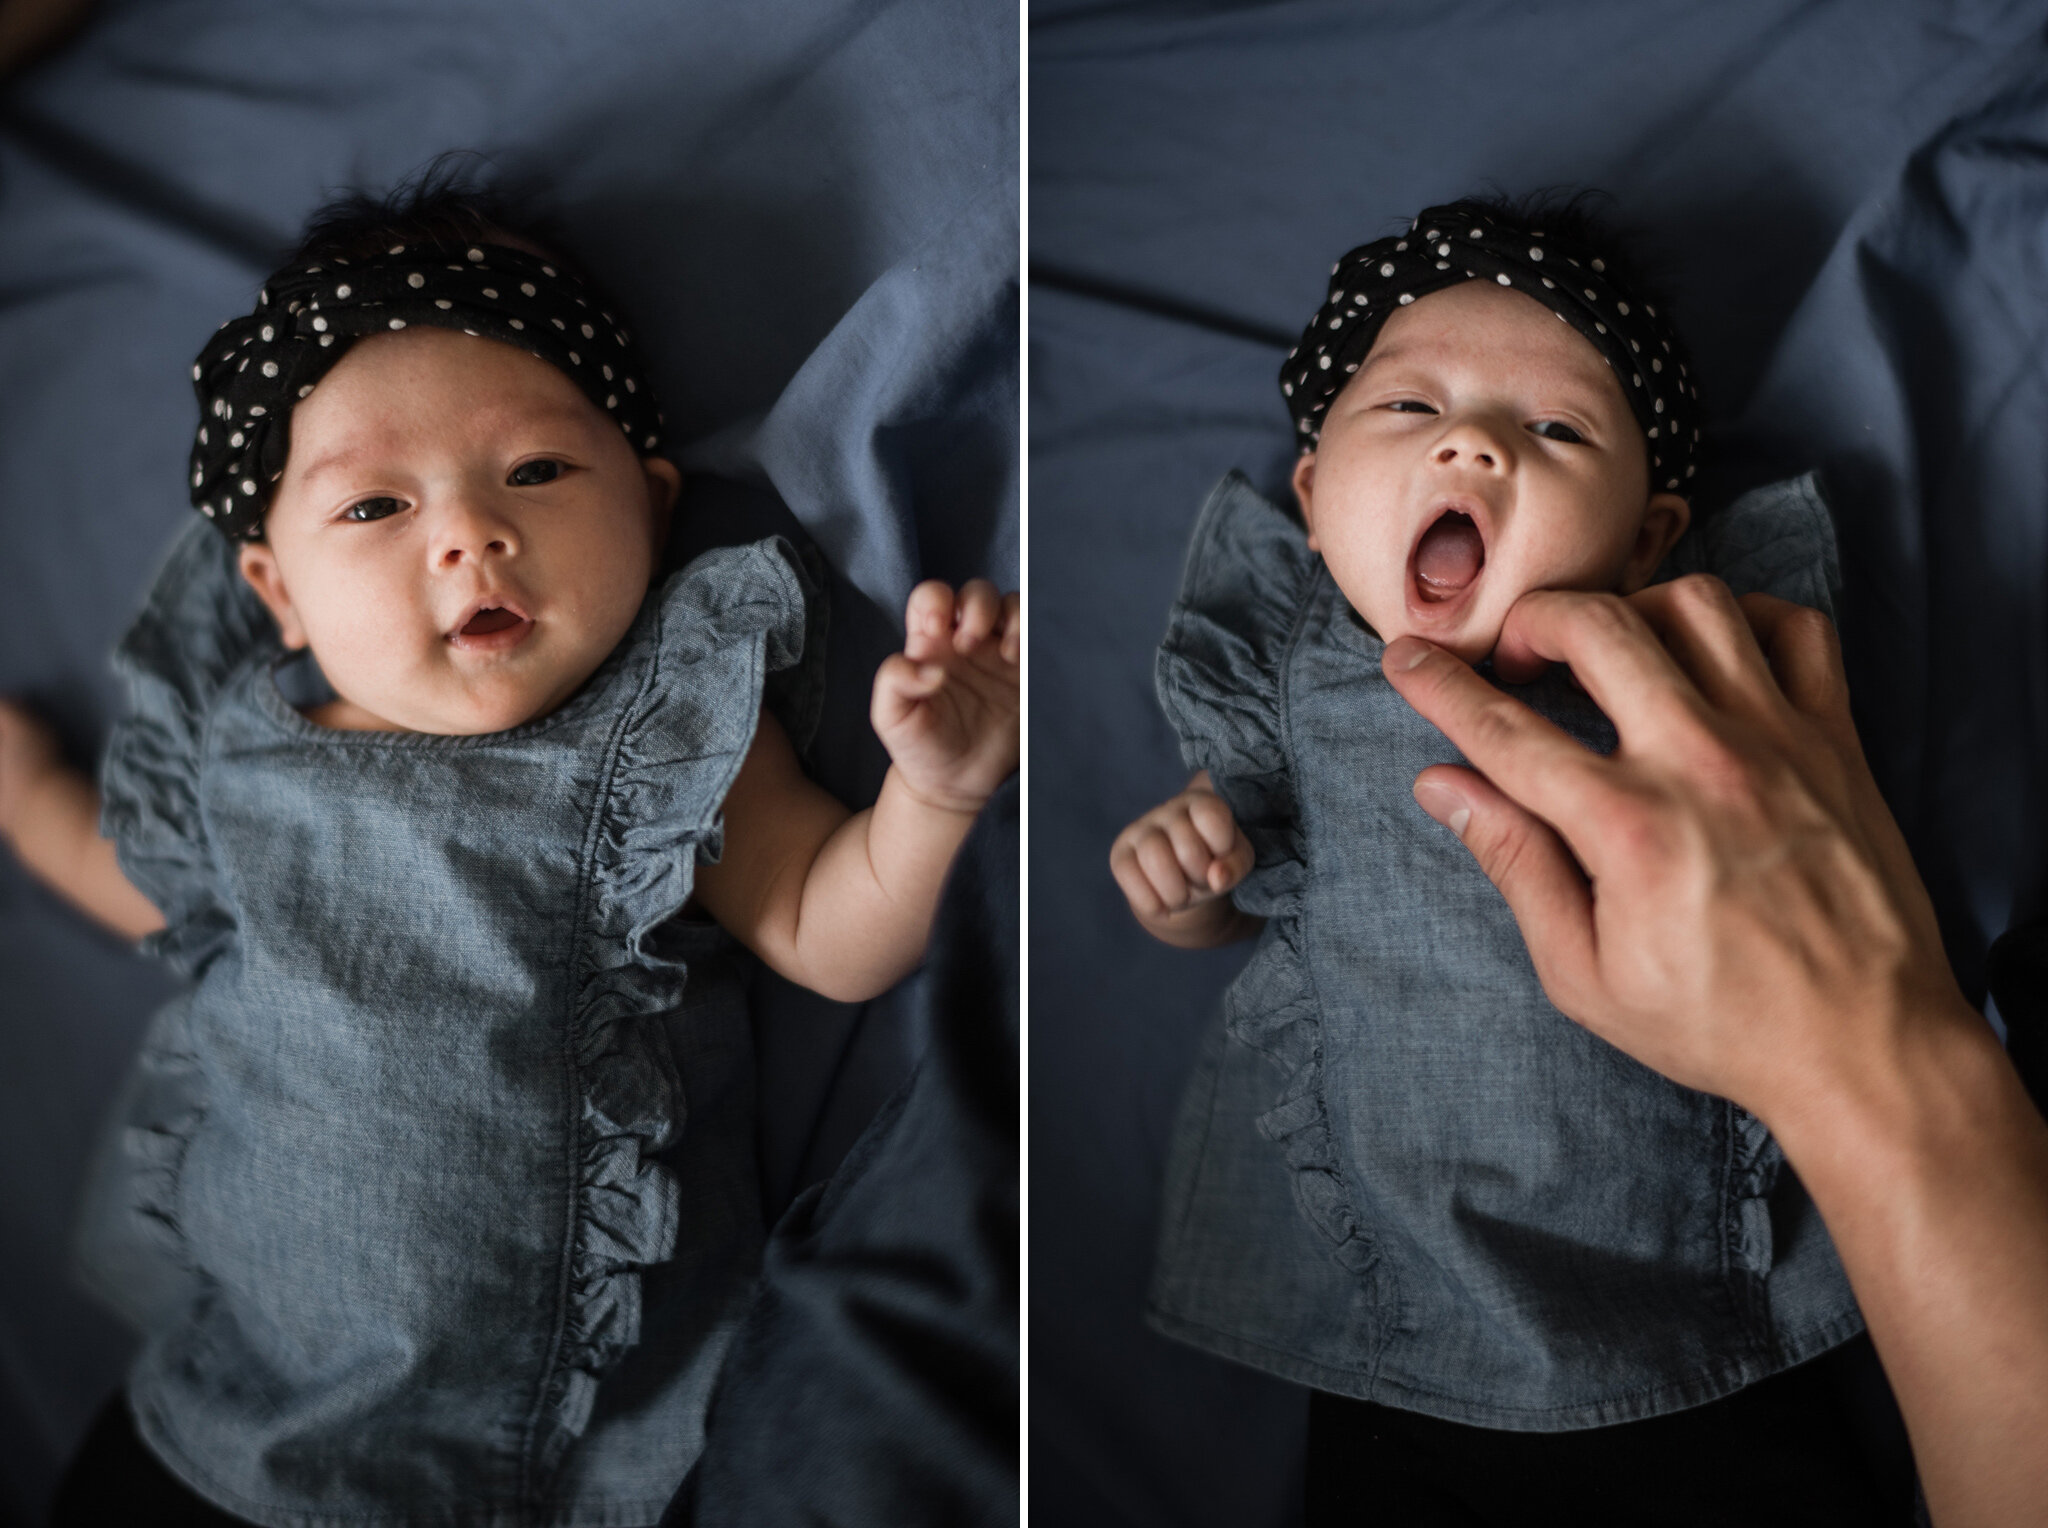 965-newborn-portraits-family-photoshoot-at-home-indoors-toronto-markham.jpg